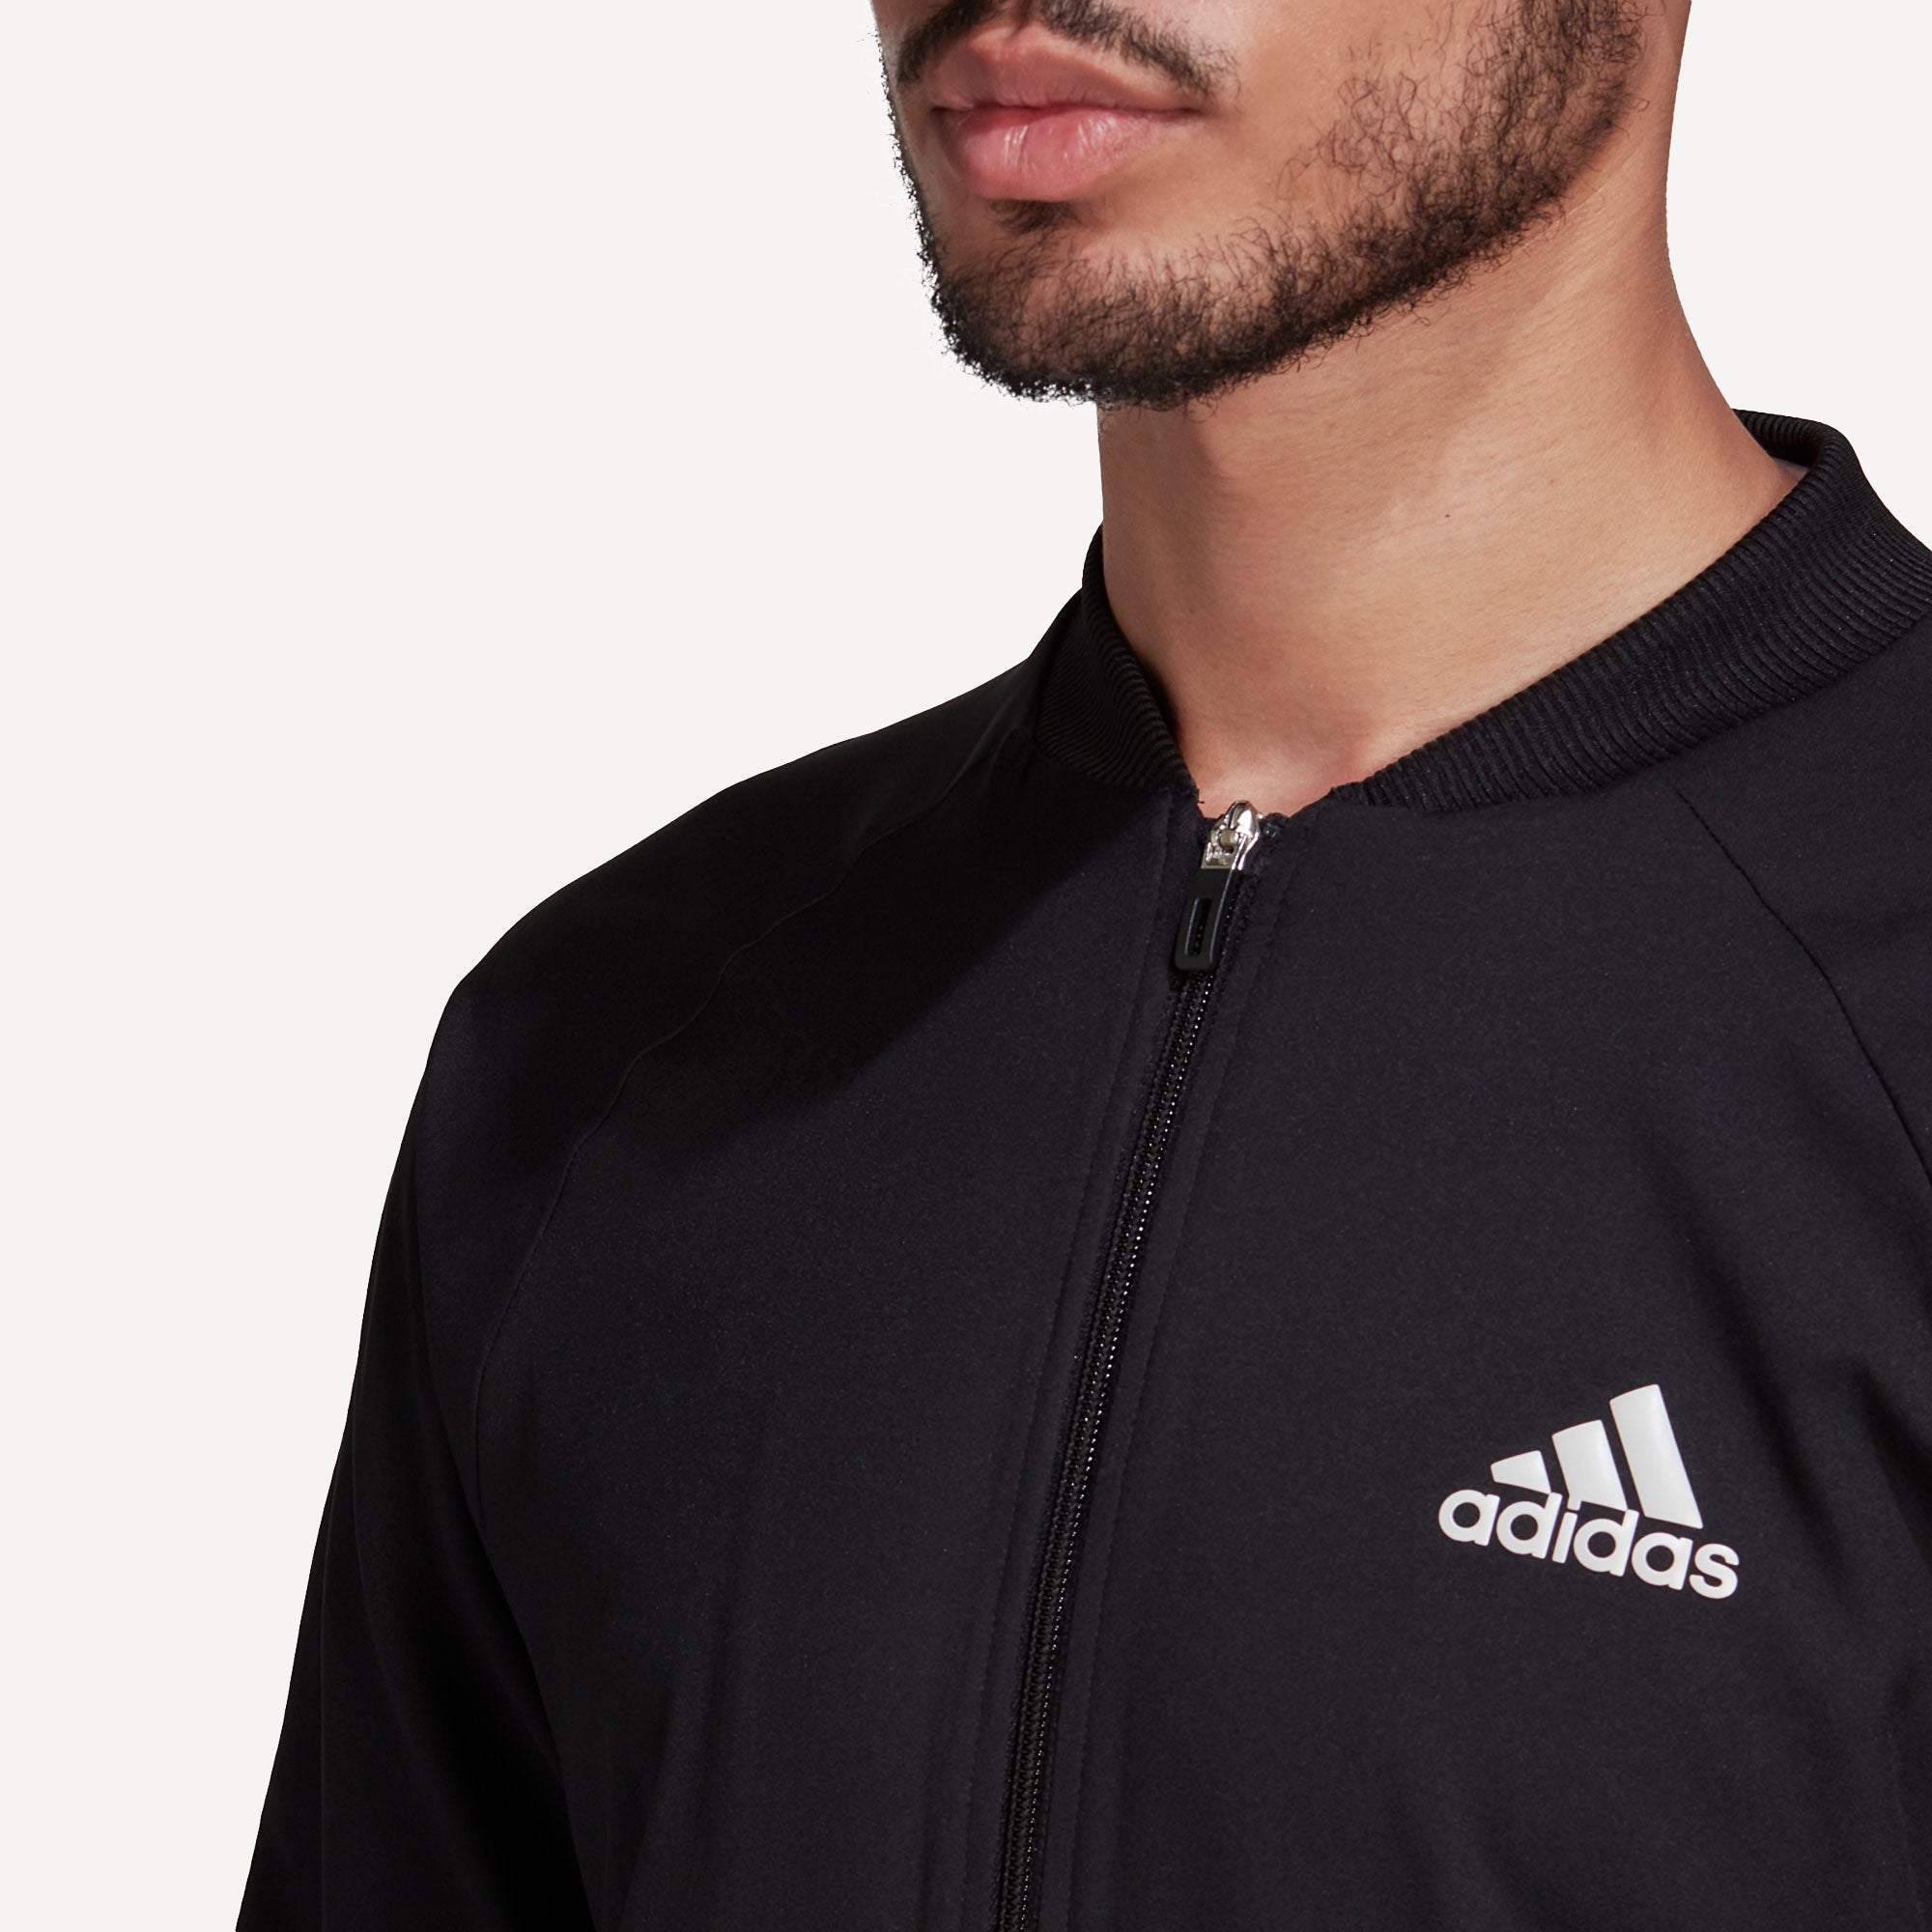 adidas Men's Graphic Tennis T-Shirt Black (7)